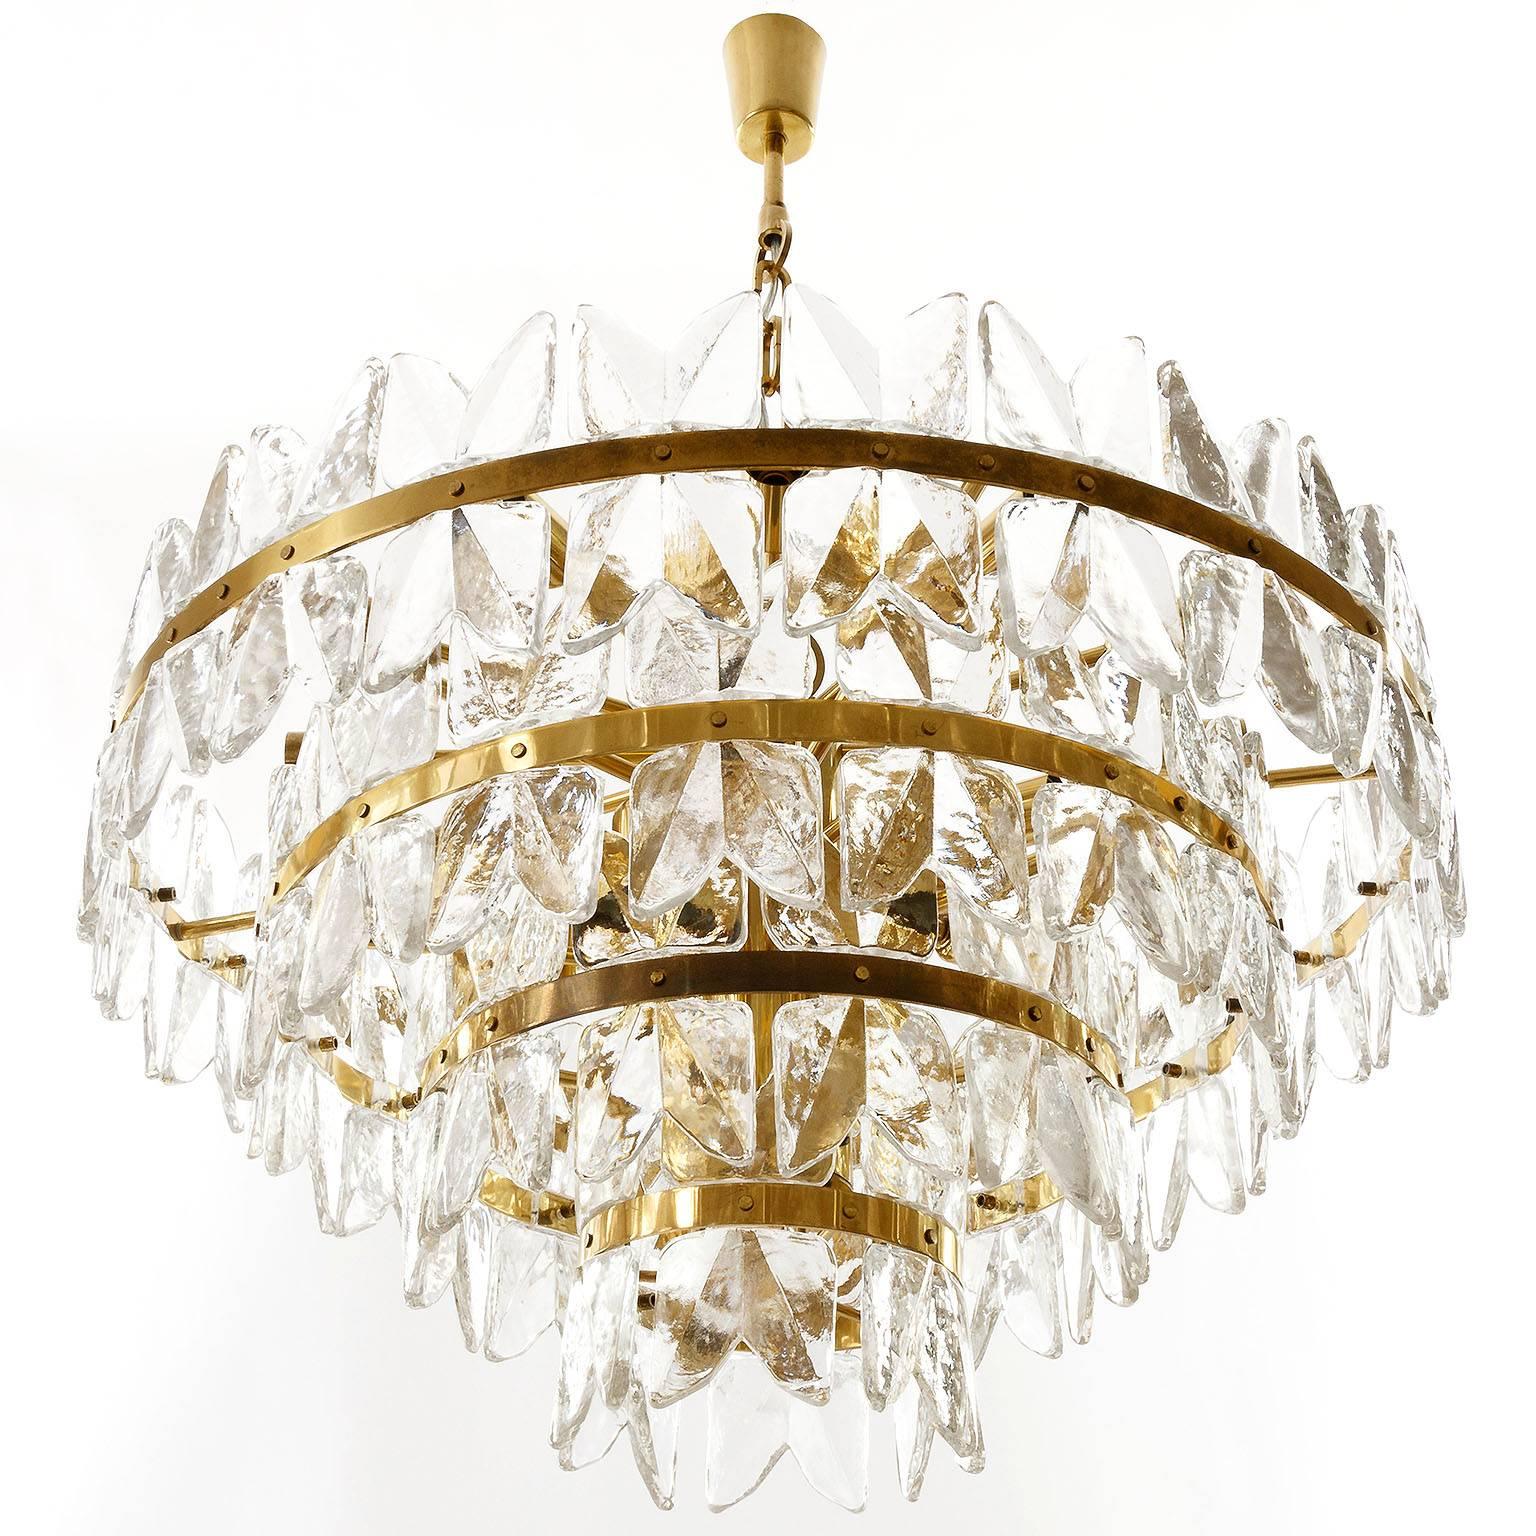 Hollywood Regency Large Kalmar Chandelier Pendant Light, Brass and Glass, Corina Model, 1970